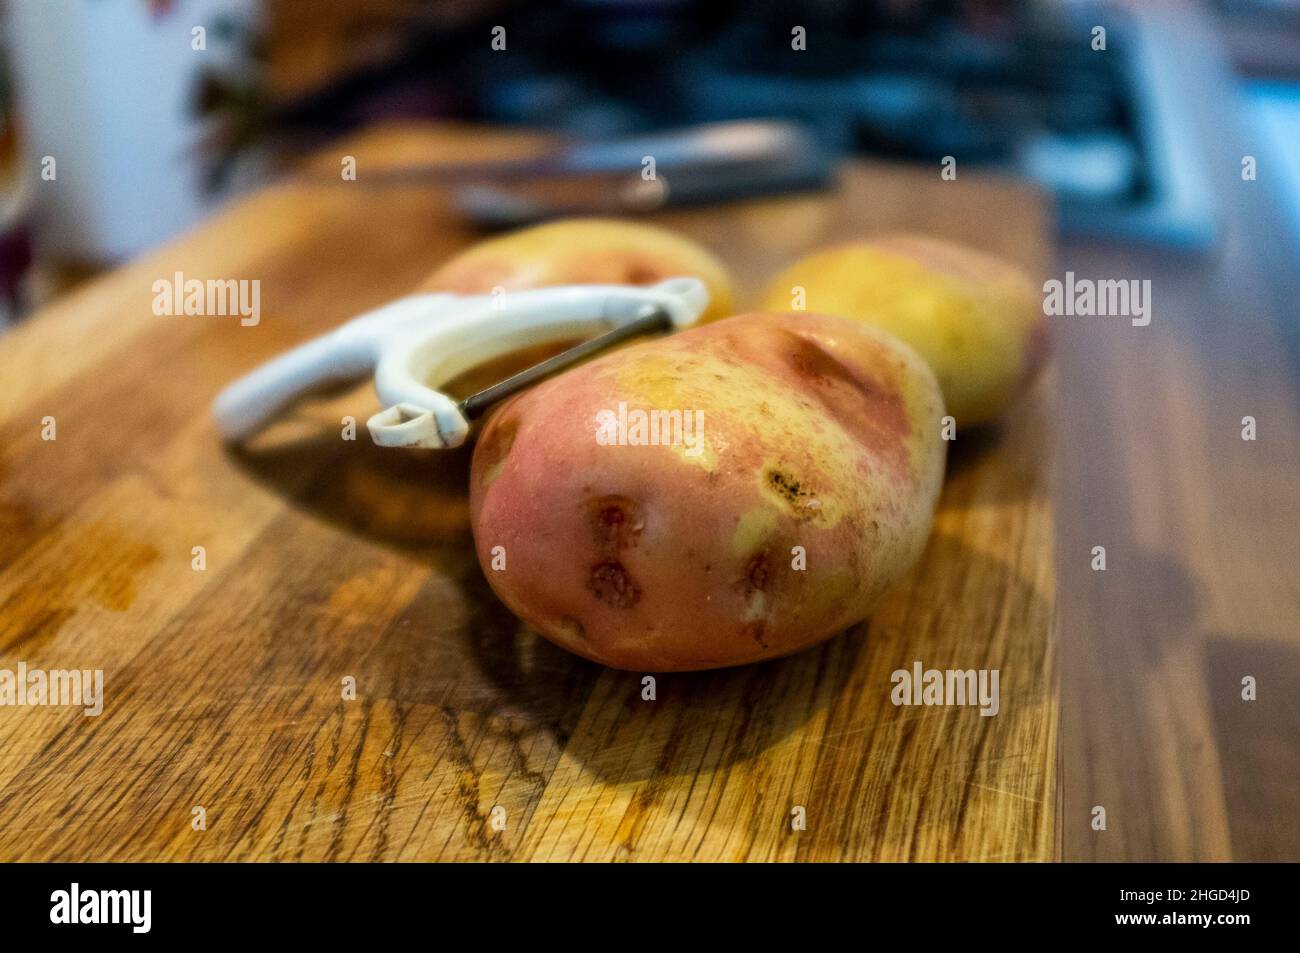 King Edward potatoes ready for peeling and cooking UK Stock Photo